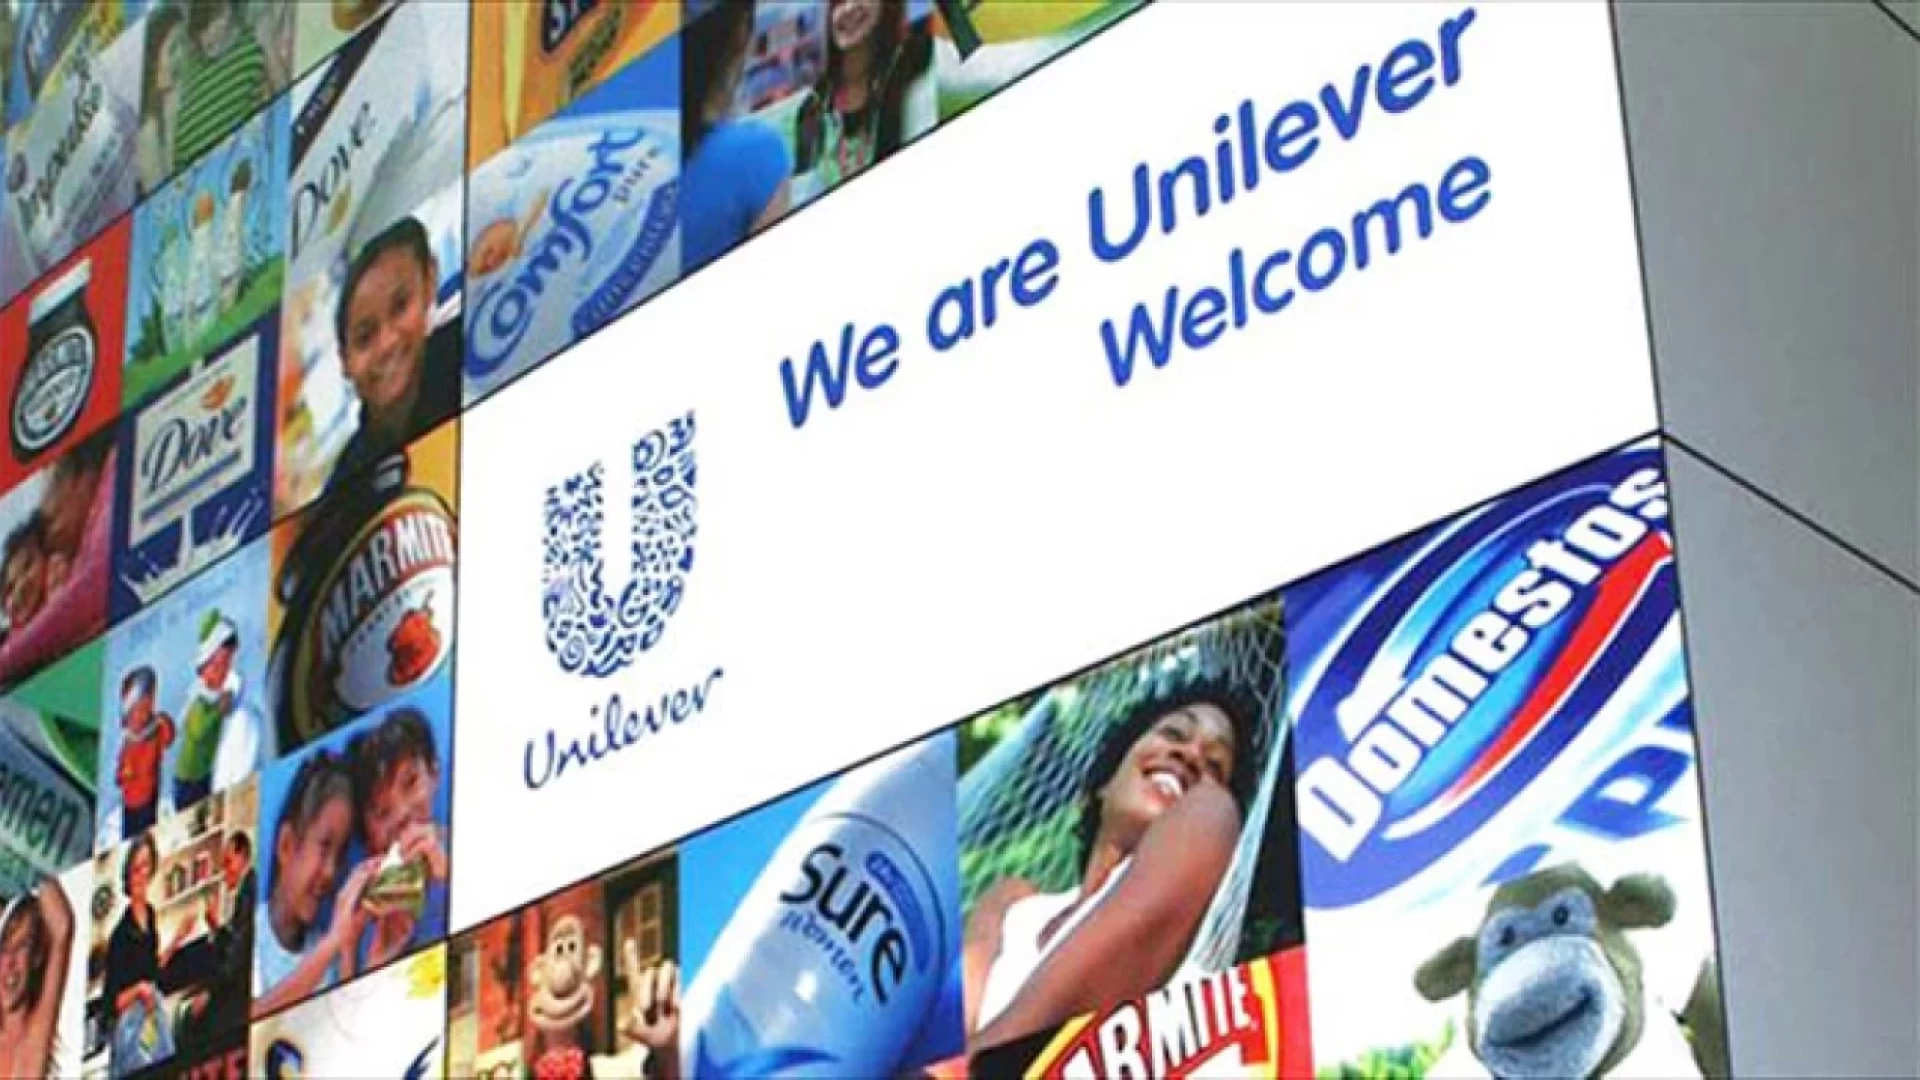 Vertenza Unilever, questa mattina l'assemblea sindacale. Il 6 febbraio manifestazione a Campobasso.